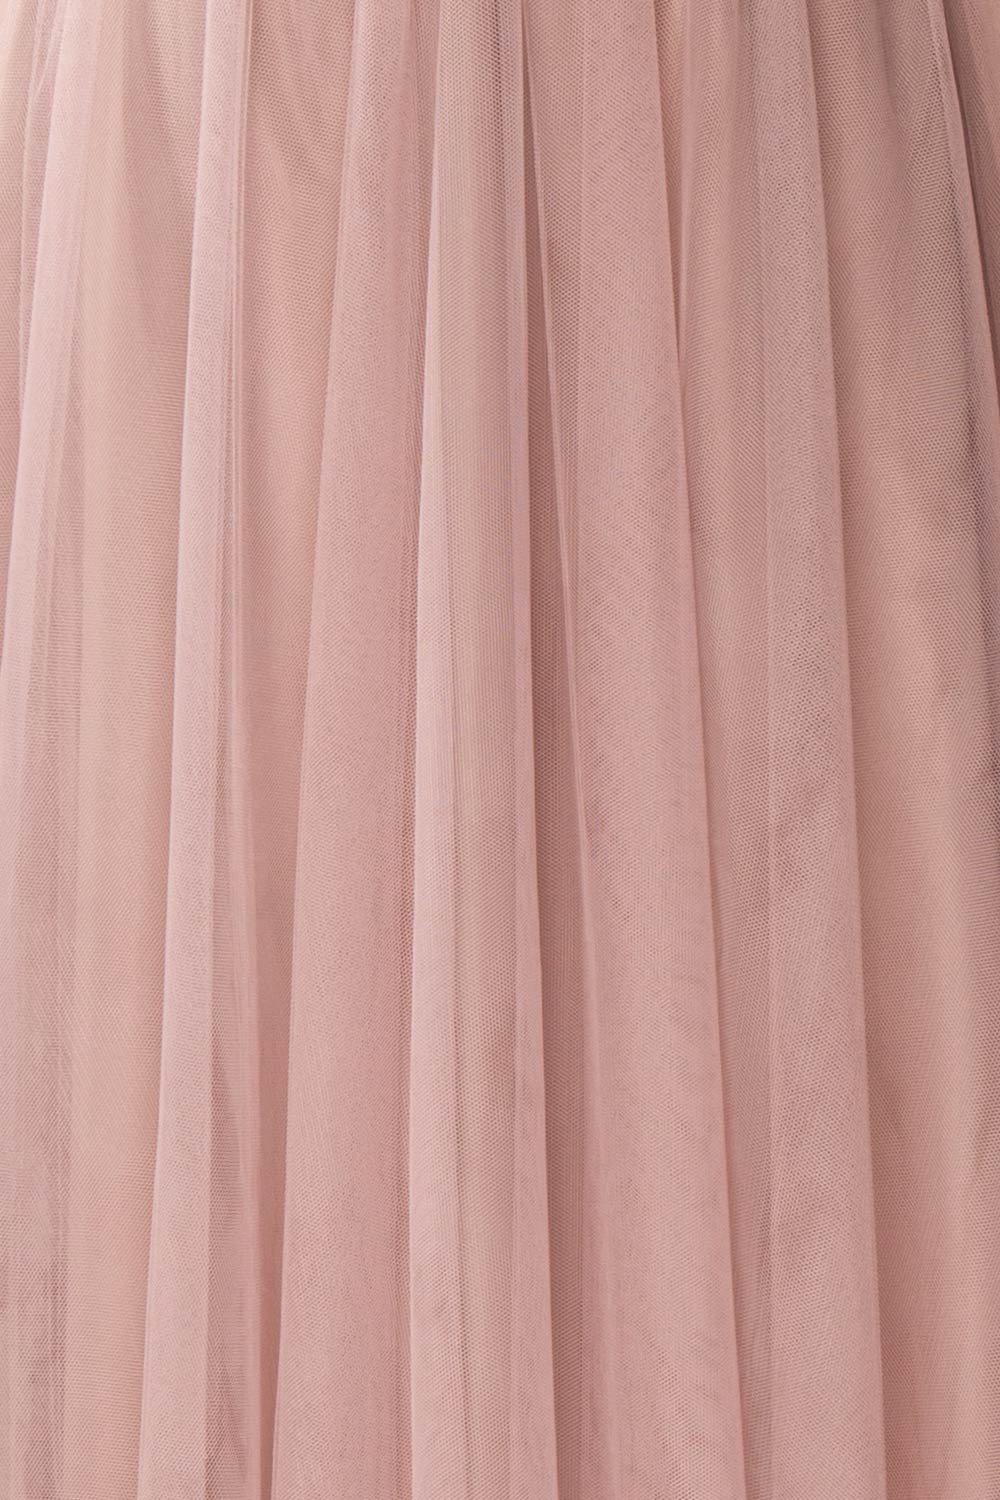 Adifa Dusty Rose Net Tulle Sleeveless A-Line Gown | Boudoir 1861 8